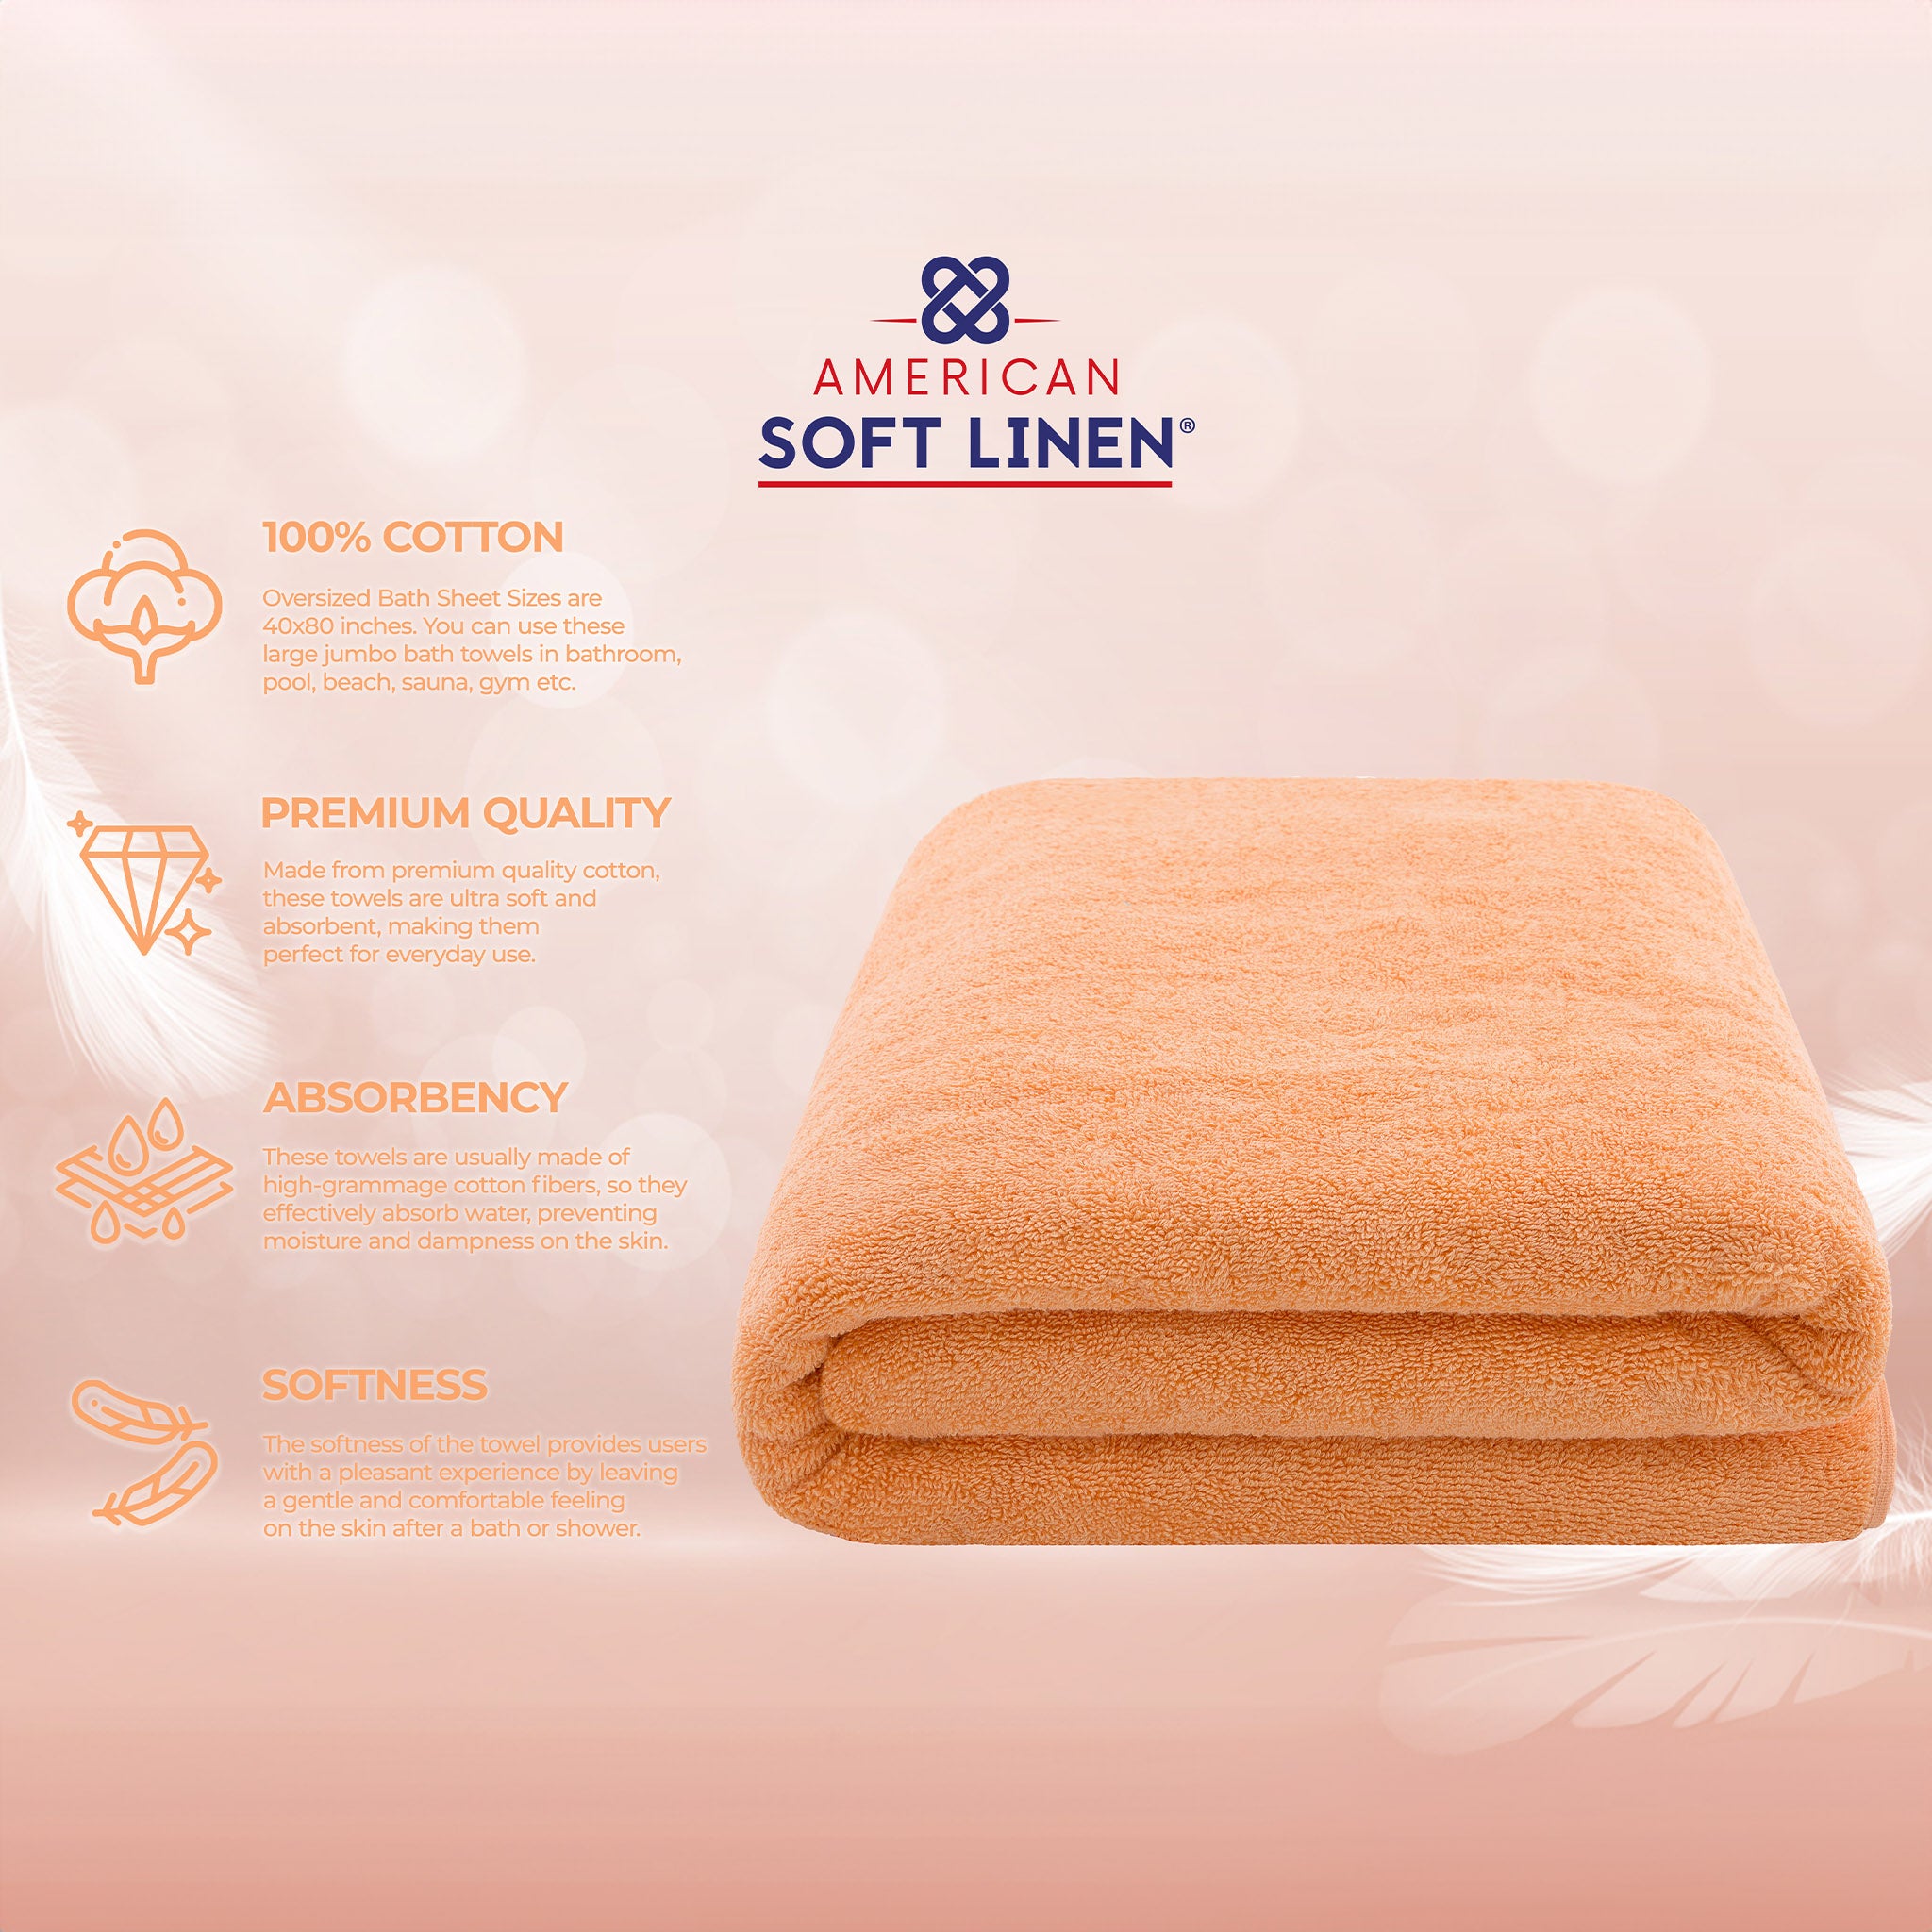 American Soft Linen 100% Ring Spun Cotton 40x80 Inches Oversized Bath Sheets malibu-peach-4